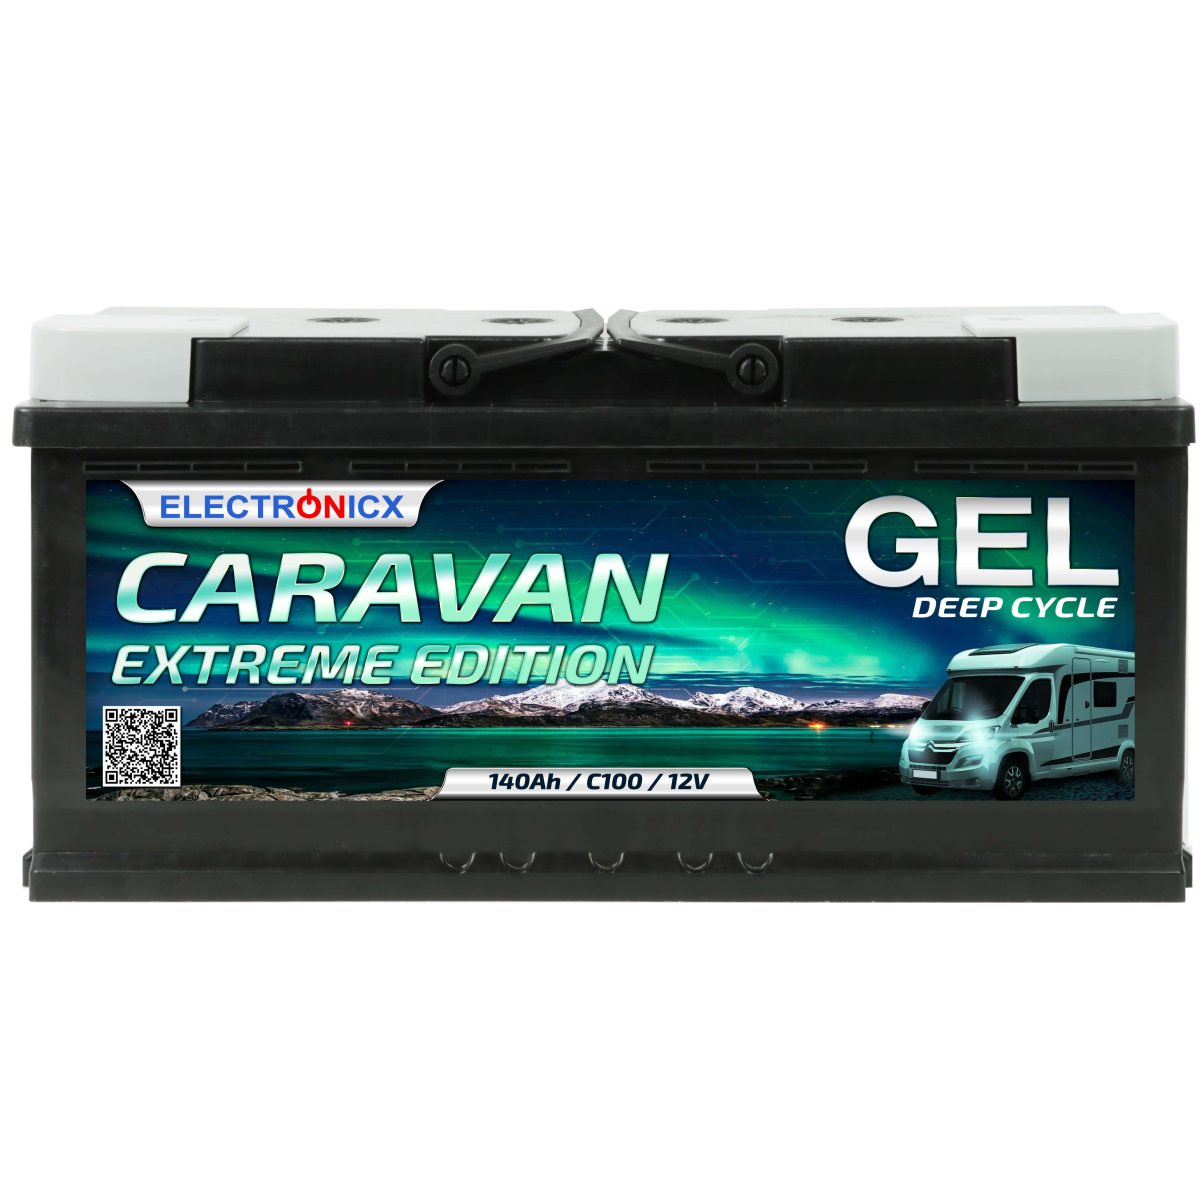 Electronicx Caravan extreme Edition Gel Battery 140 ah 12v Motorhome Boat Supply